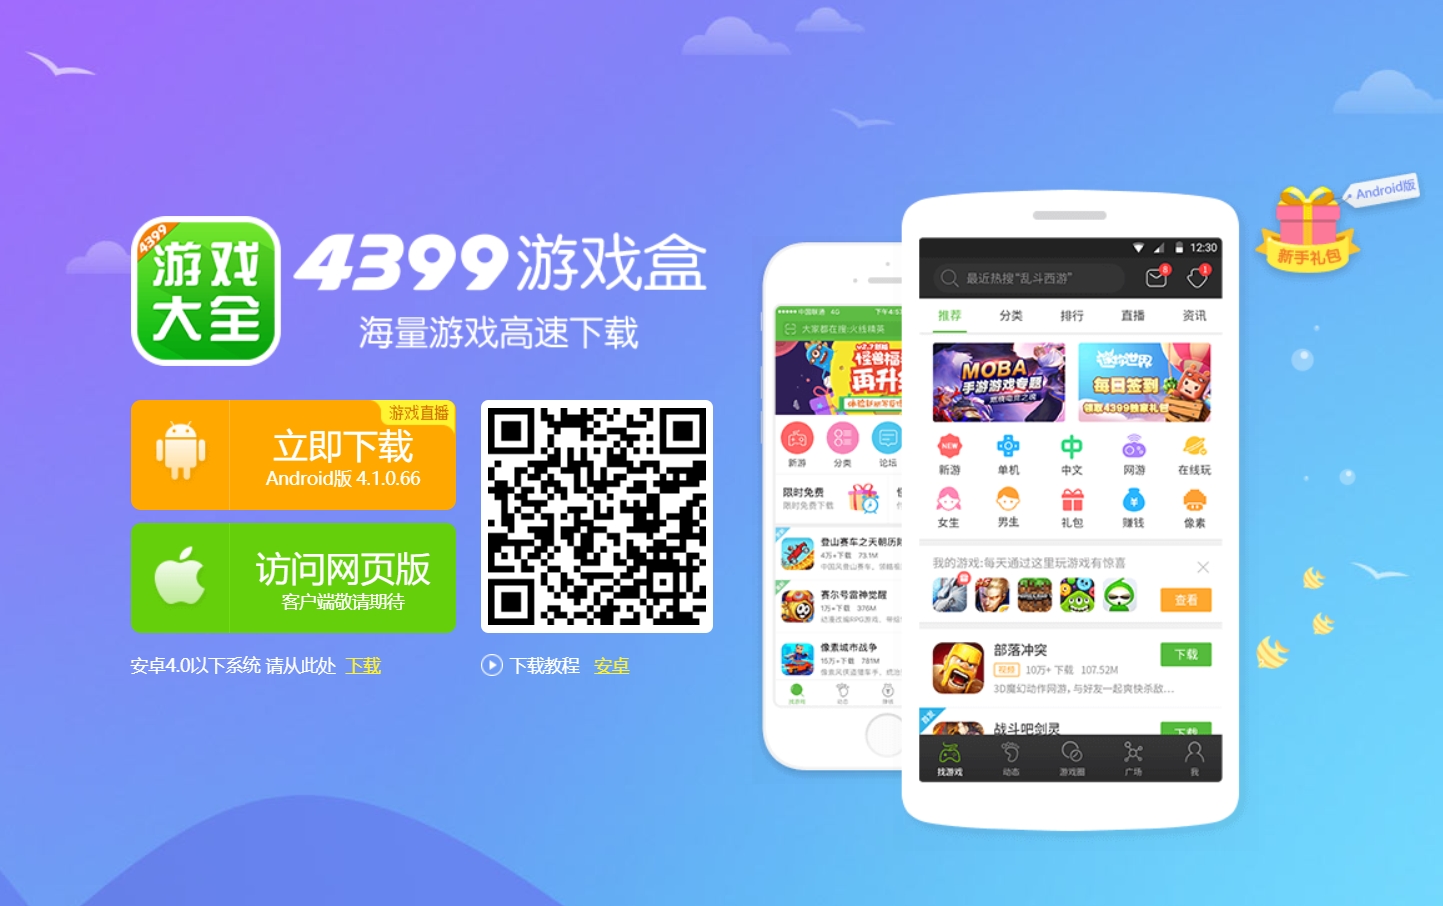 4399 – Distribuidora de jogos e aplicativos chineses